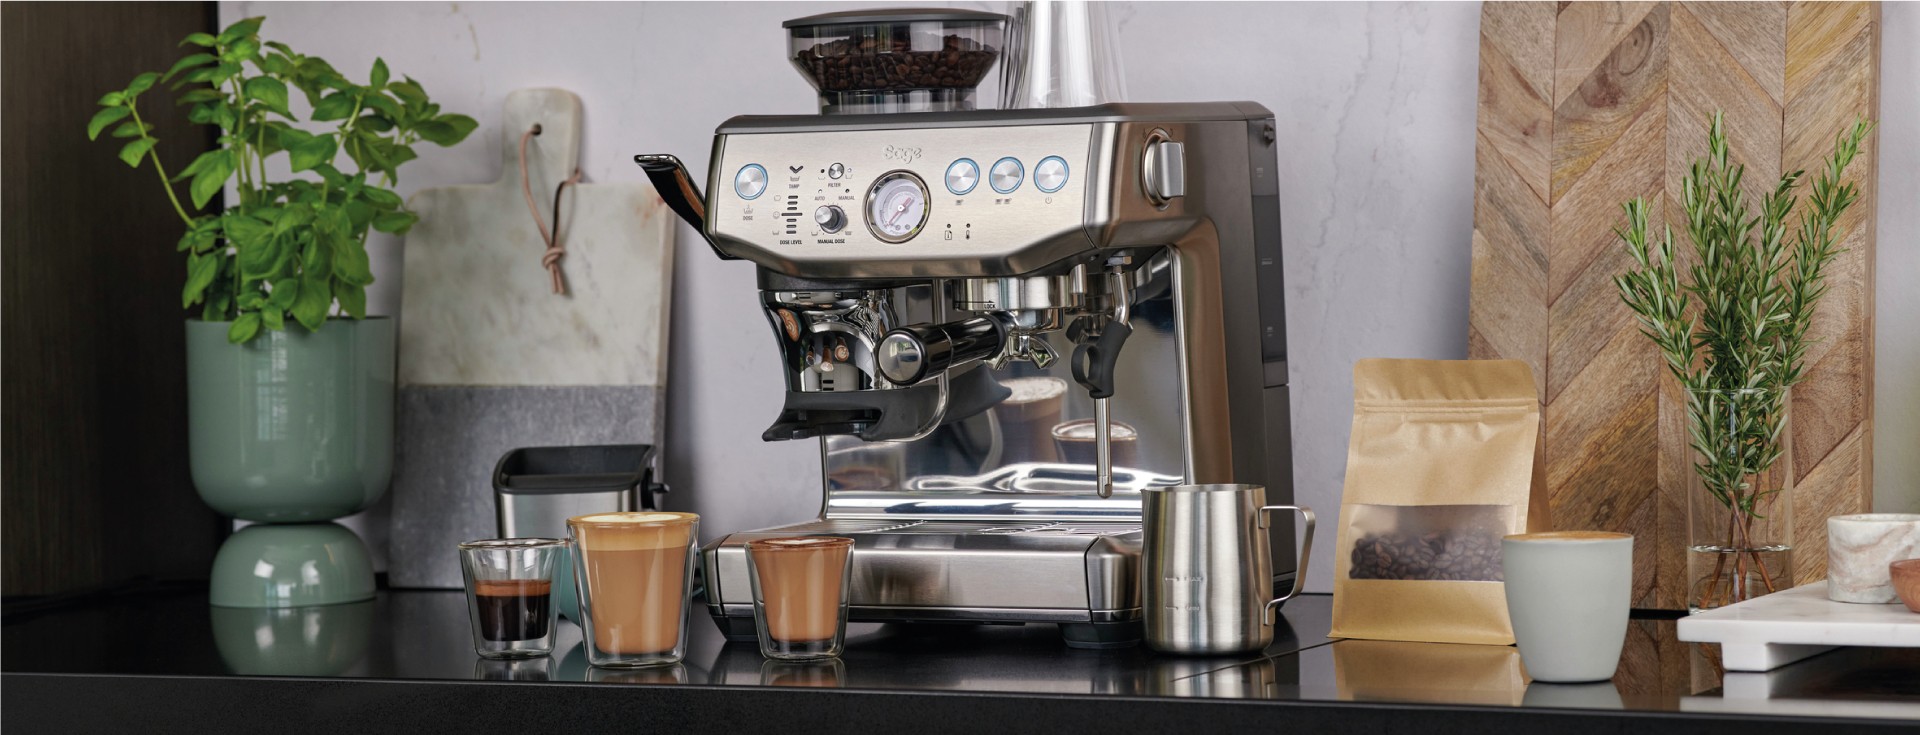 Machine à café sage barista impress